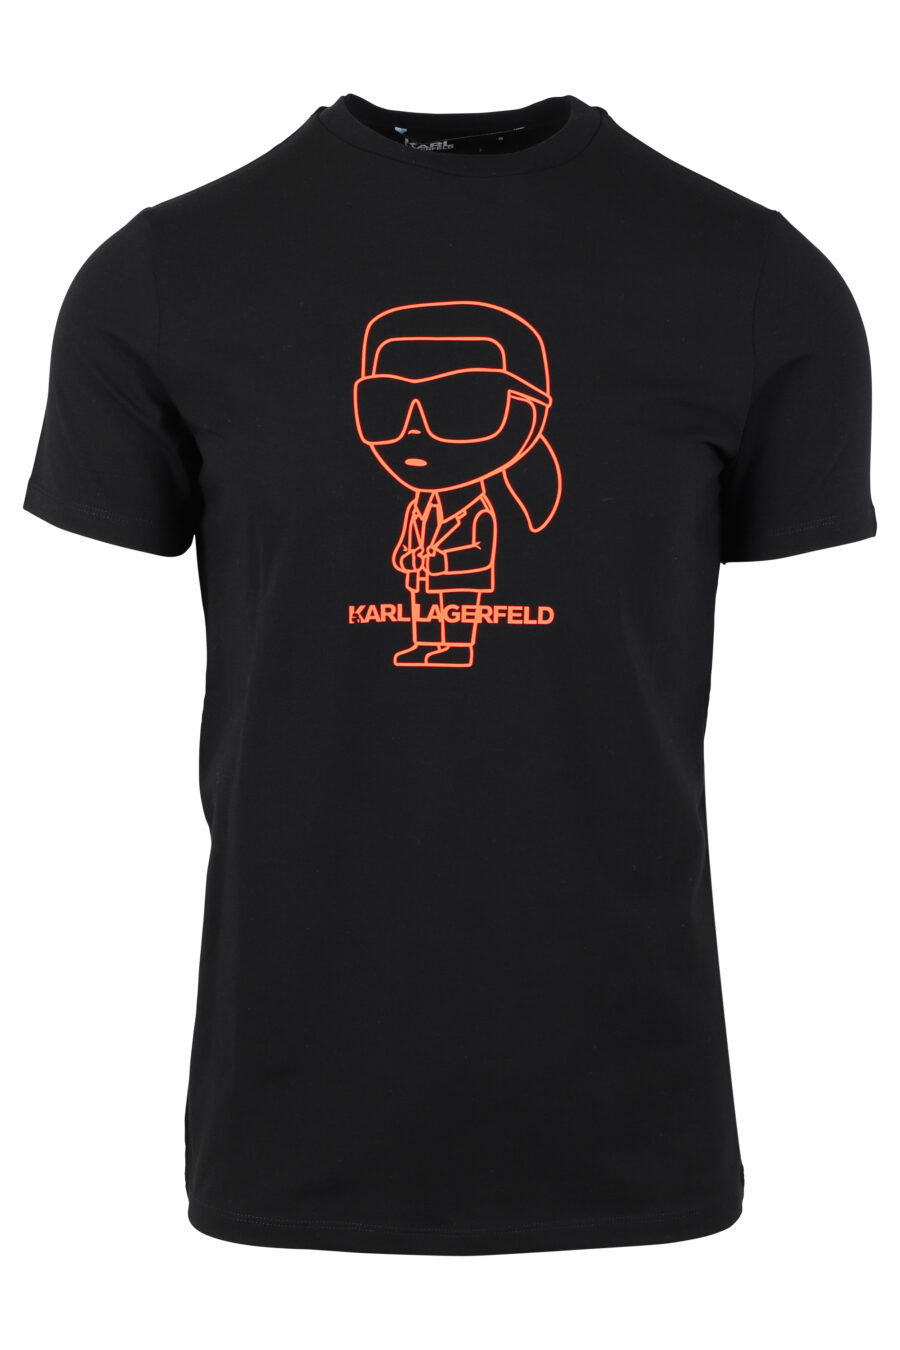 T-shirt preta com maxilogo "karl" em silhueta laranja - IMG 4692